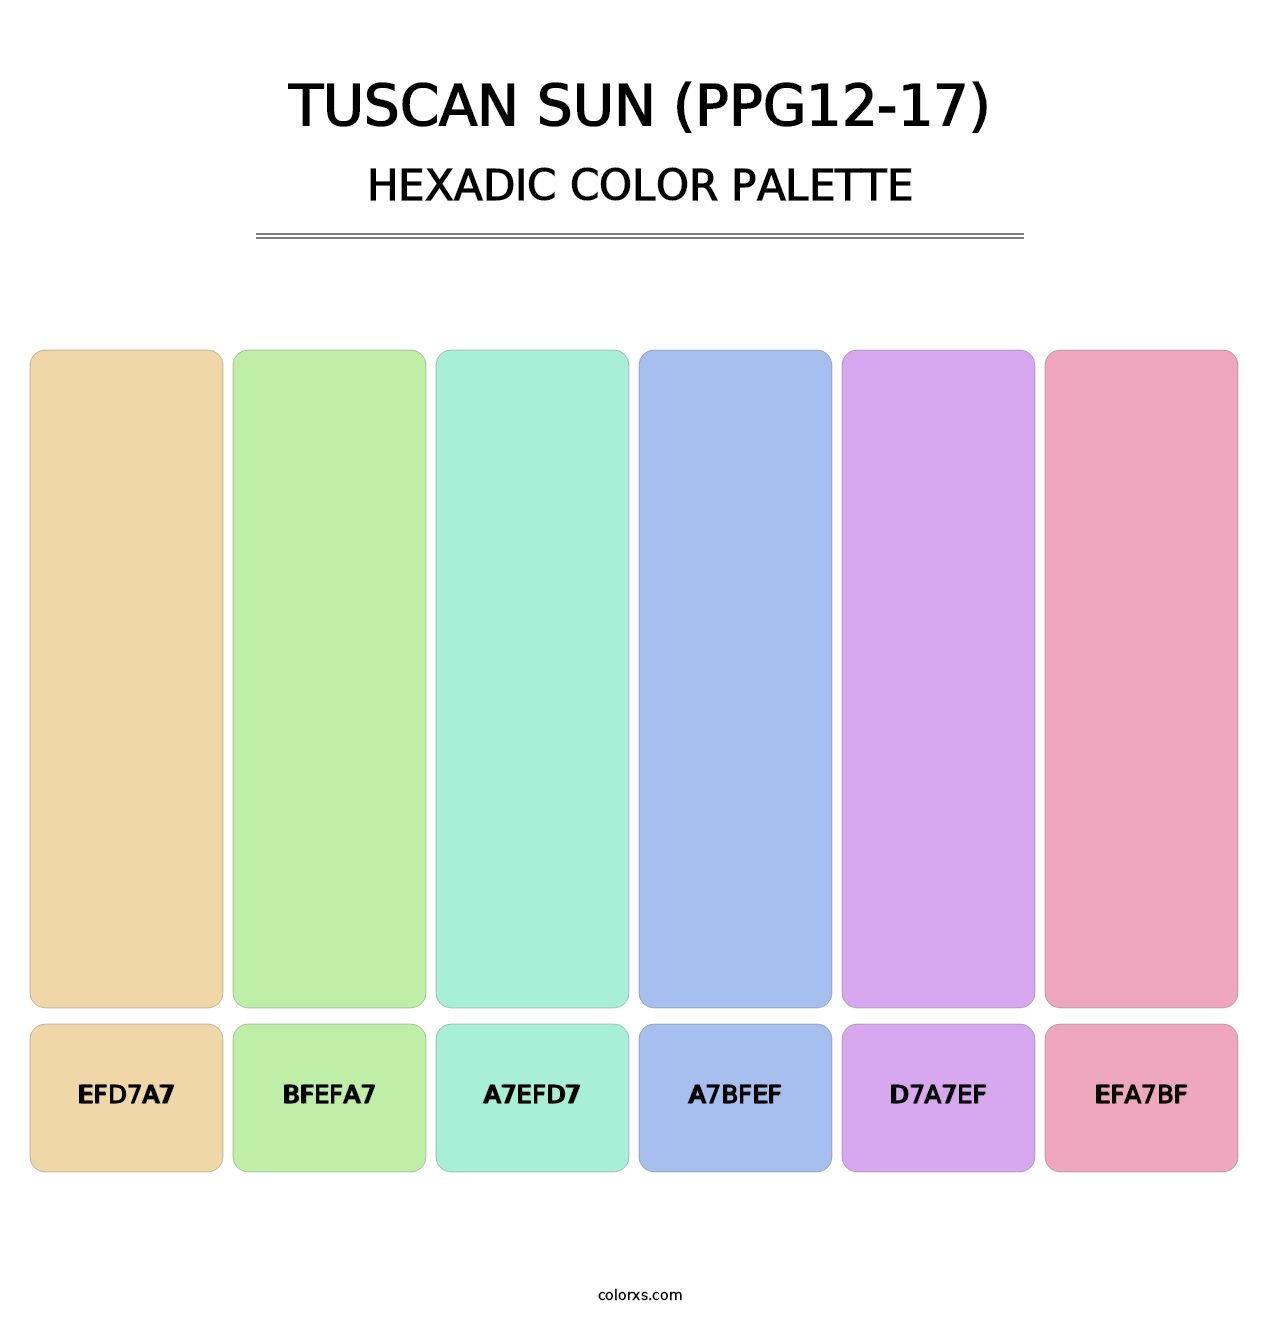 Tuscan Sun (PPG12-17) - Hexadic Color Palette